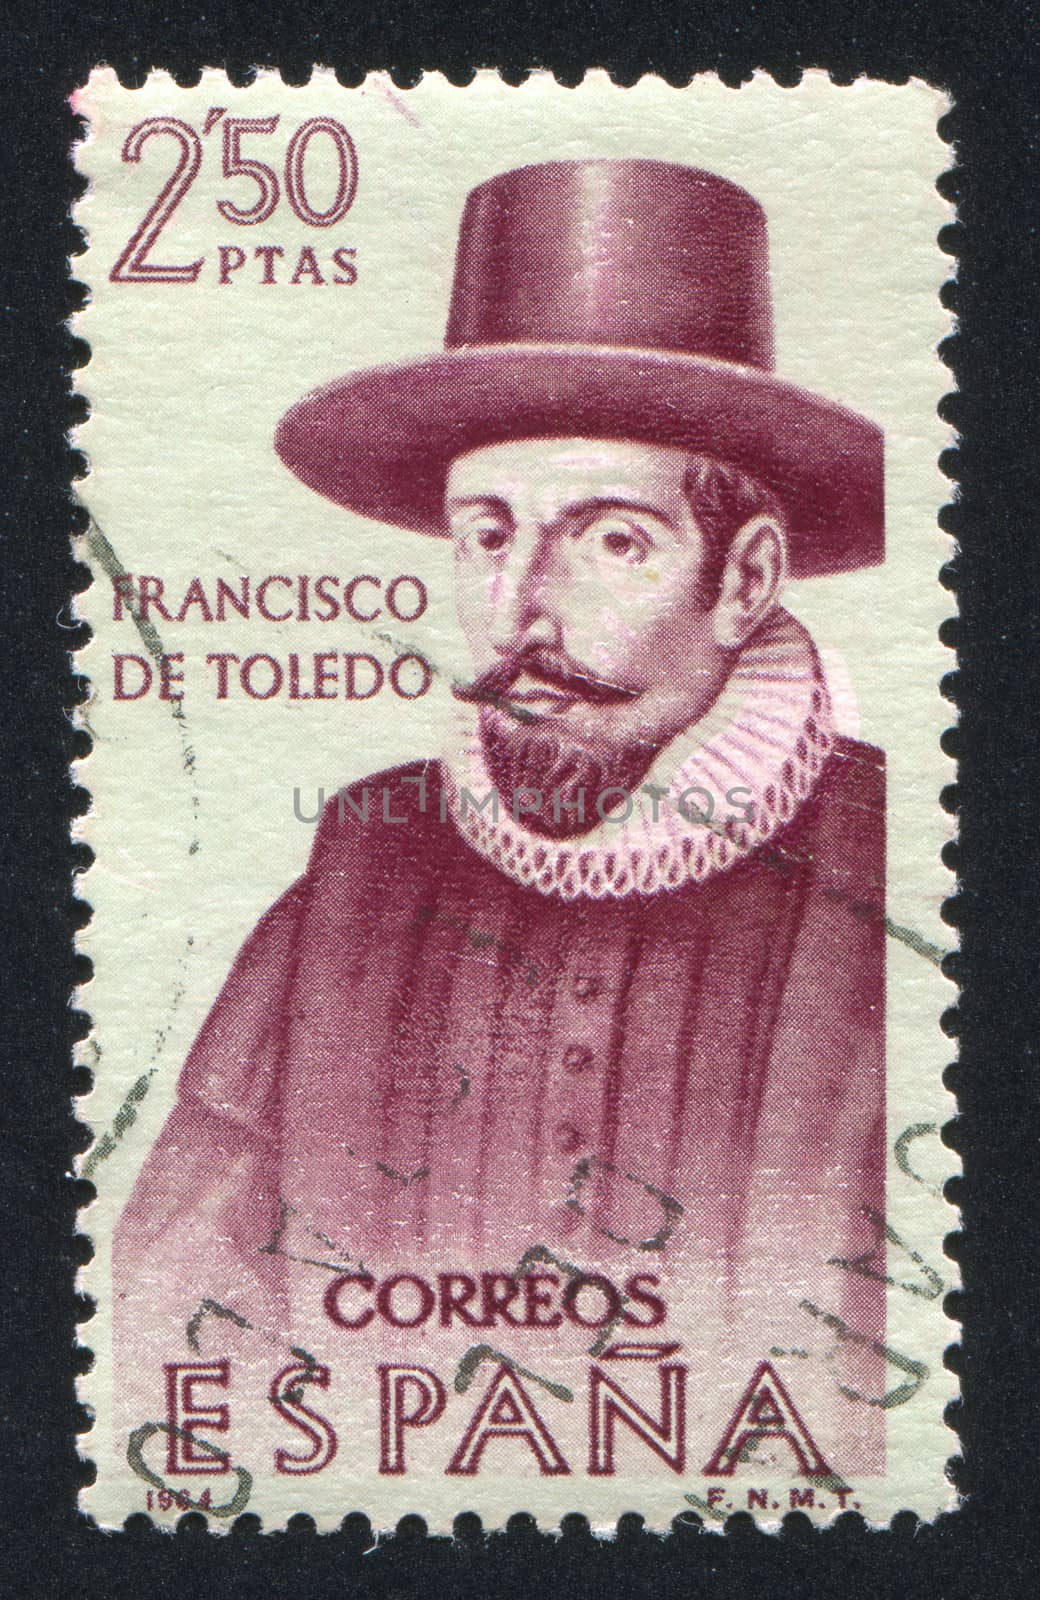 SPAIN - CIRCA 1964: stamp printed by Spain, shows Portrait of Francisco de Toledo, circa 1964